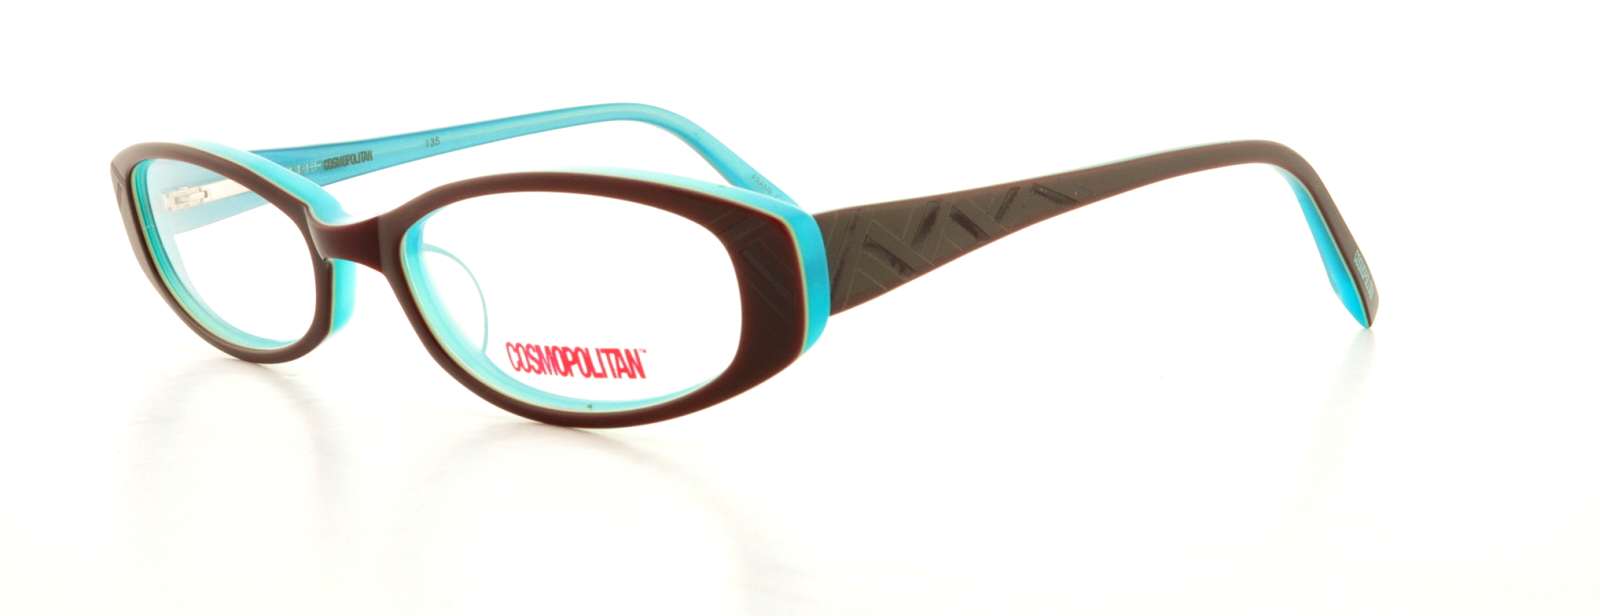 Picture of Cosmopolitan Eyeglasses STYLISH